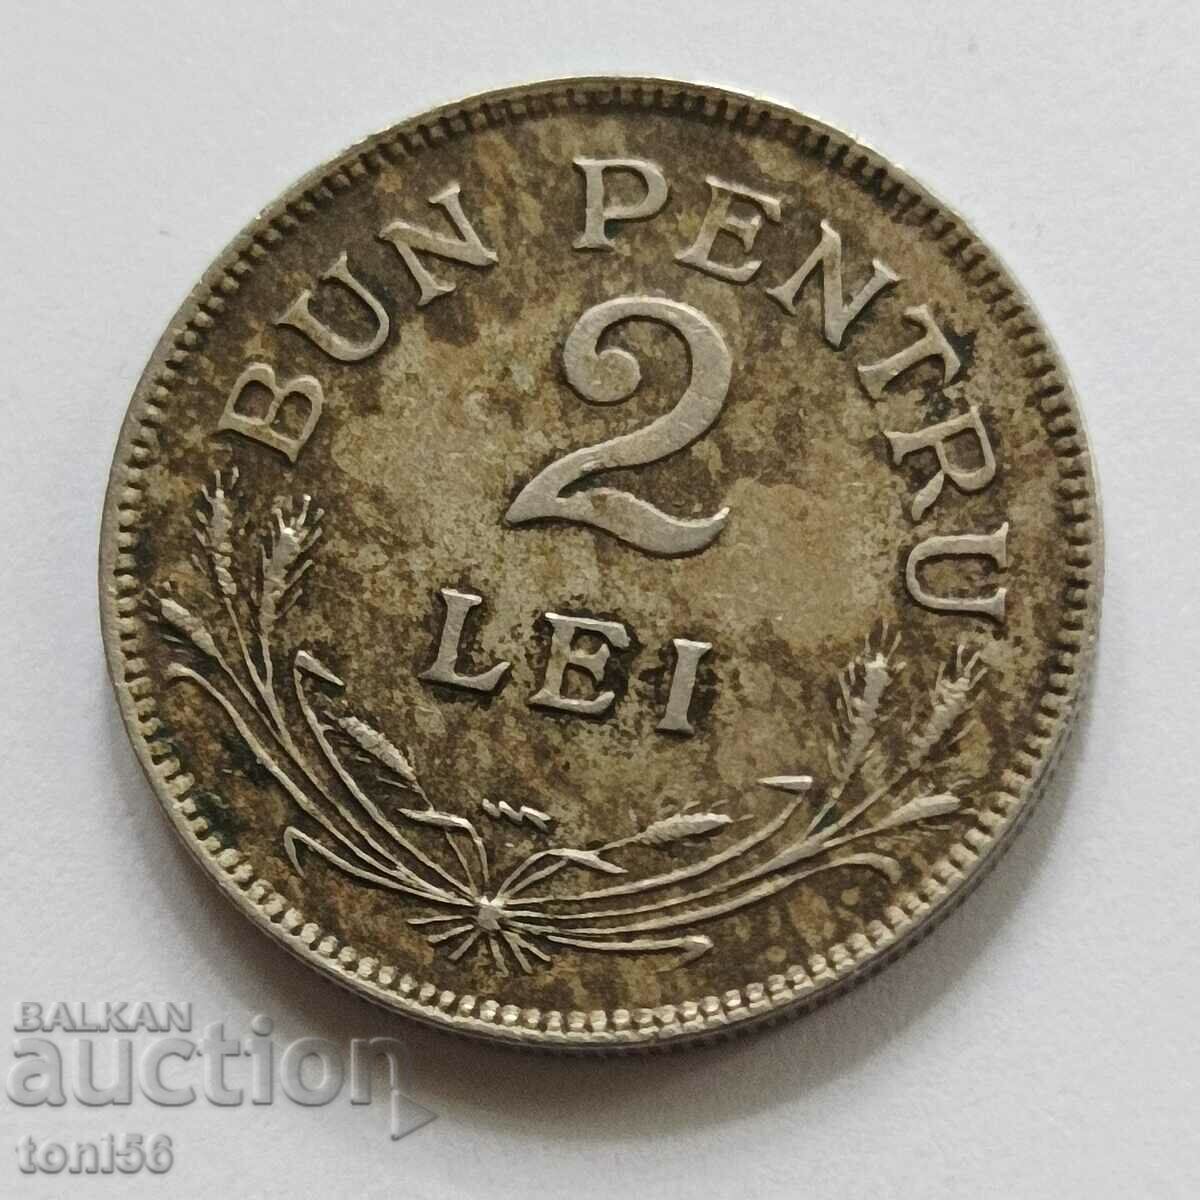 Romania 2 lei 1924, with line